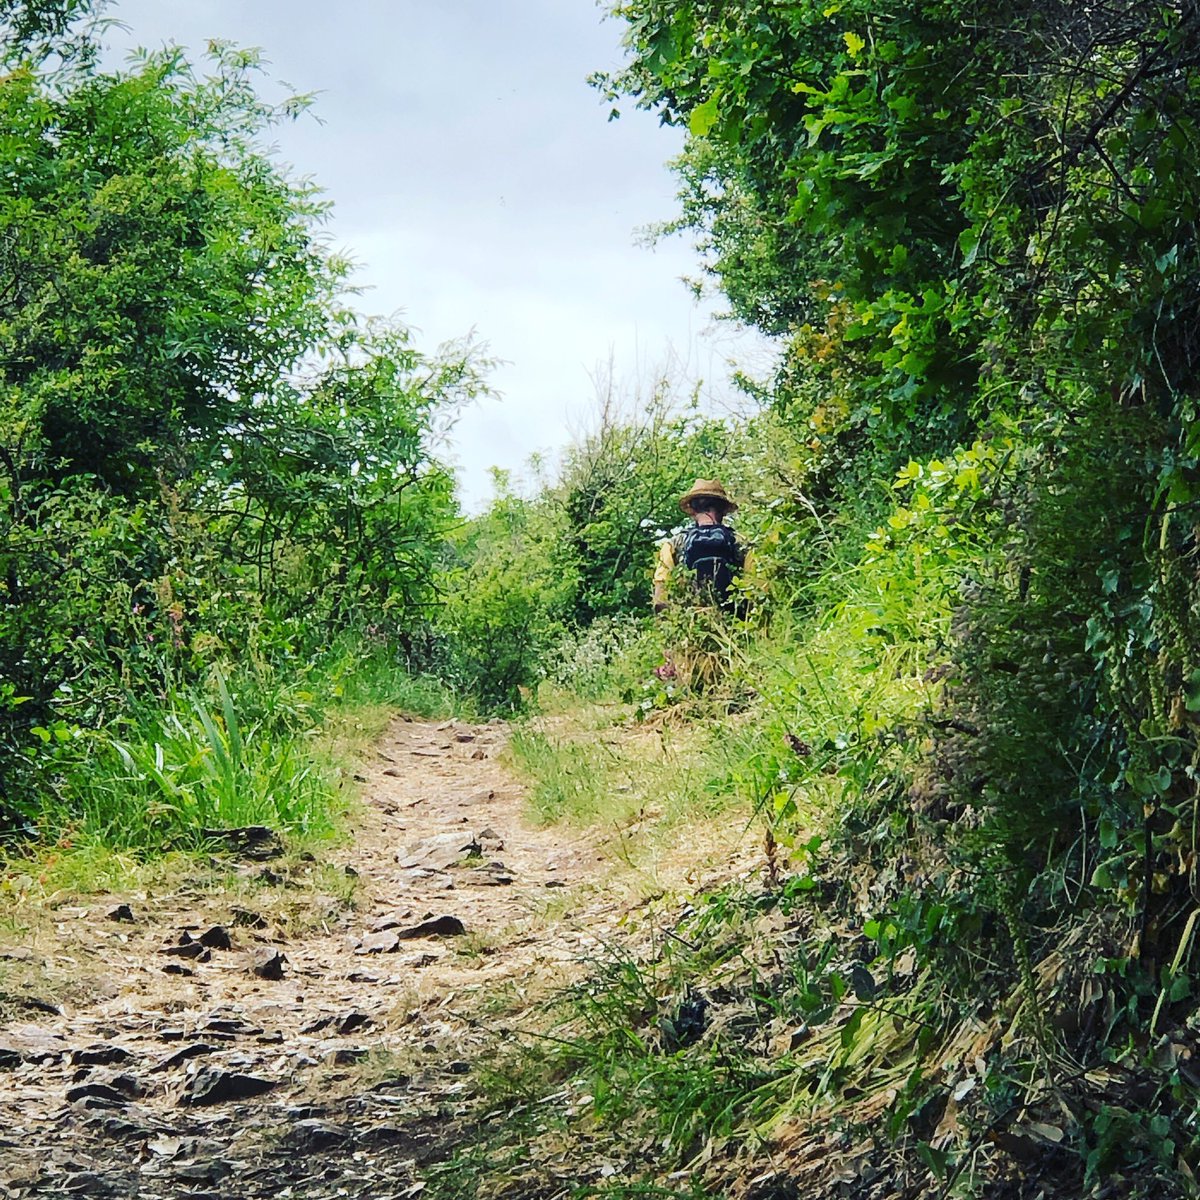 Fancy a walking break? The South West Coast path is on our doorstep. We’ve availability for September! @WindchimesH @VisitDevon @ifootpathuk @iFootpath_Accom @GuardianTravel @homeaway @TripAdvisor #holiday #Travel #Devon #Cornwall